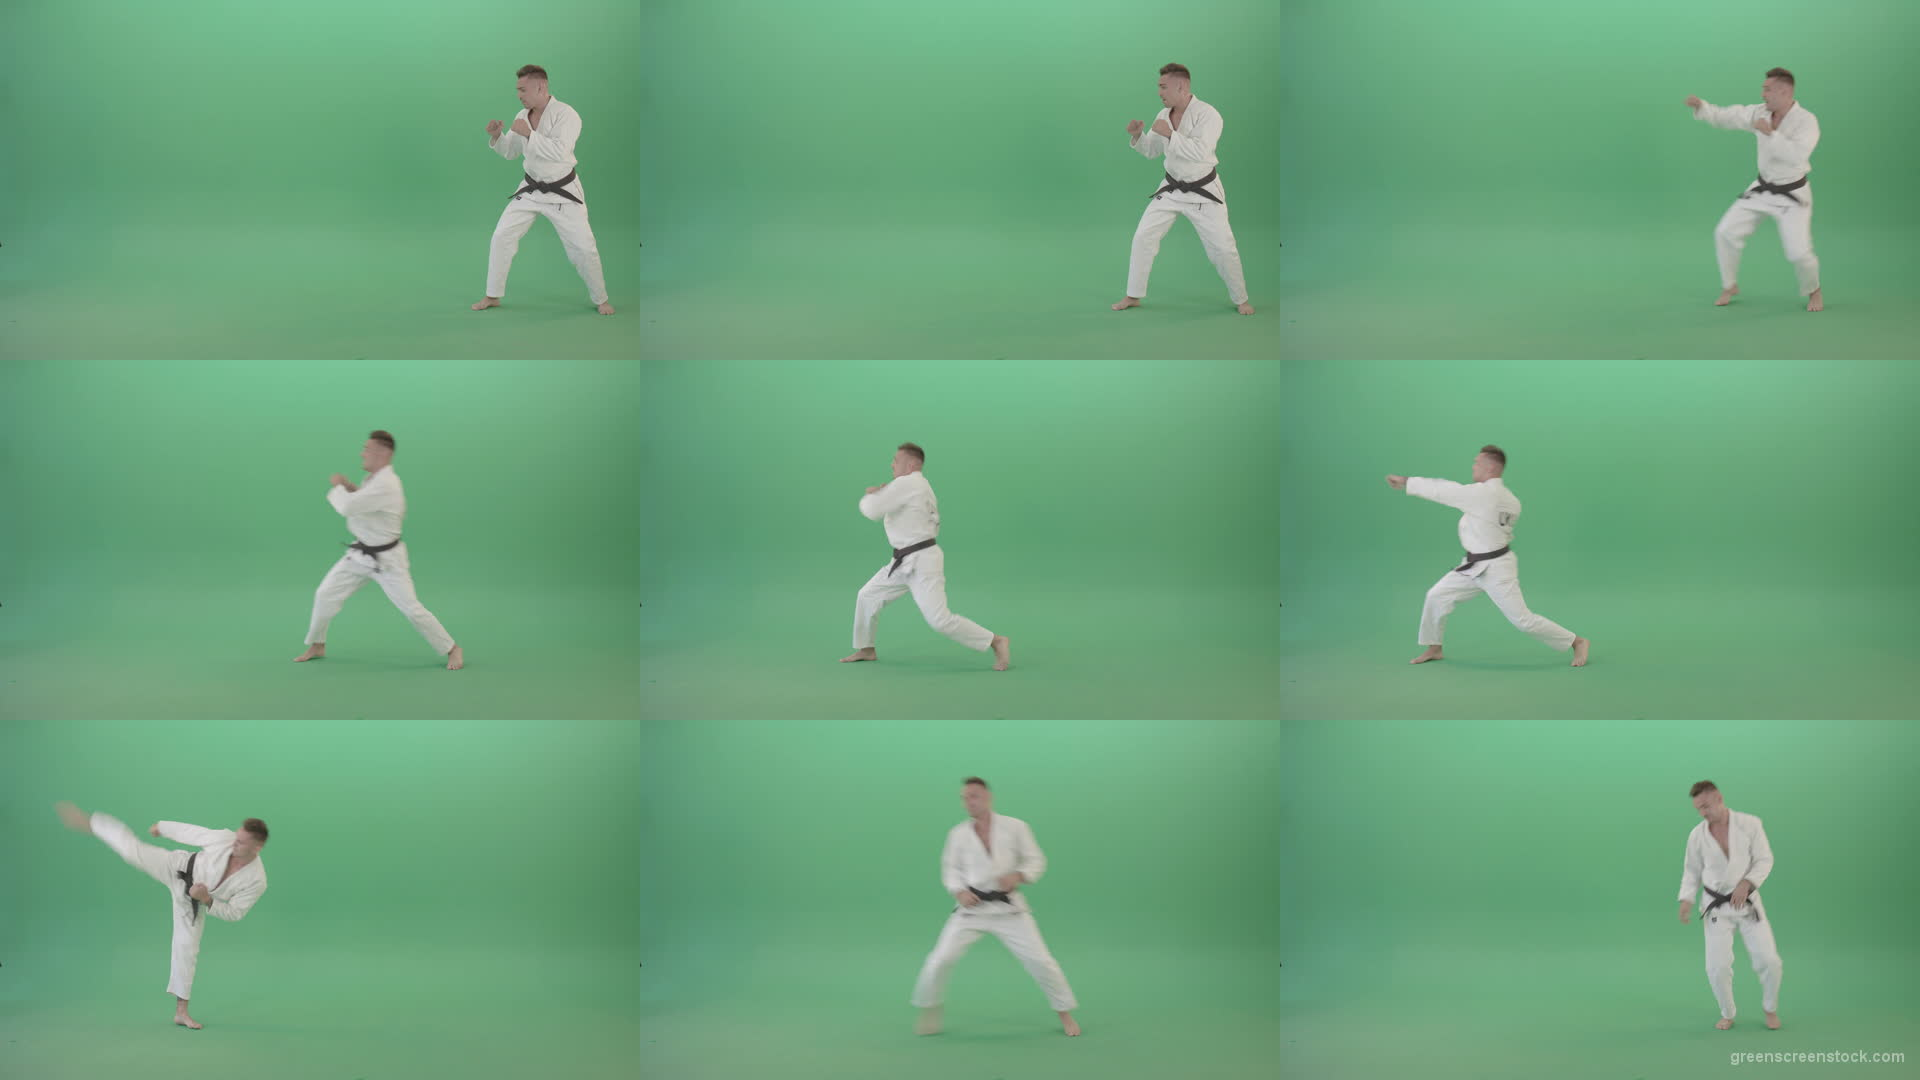 Karate-Sport-man-make-side-kick-isolated-on-green-screen-4K-Video-Footage-1920 Green Screen Stock